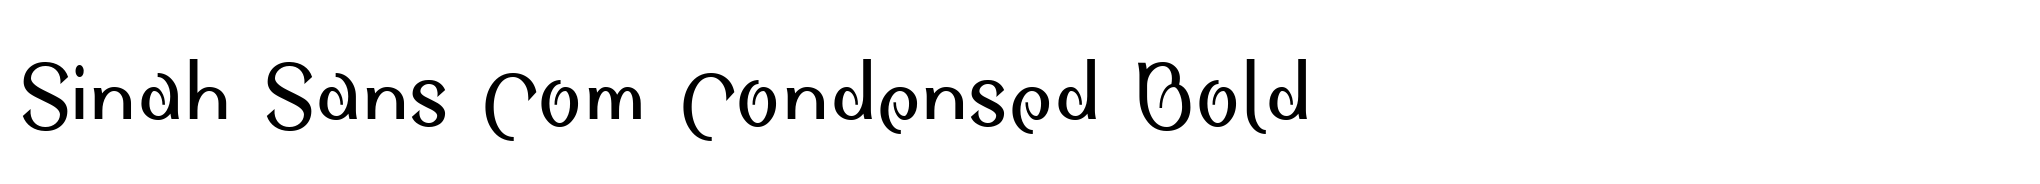 Sinah Sans Com Condensed Bold image